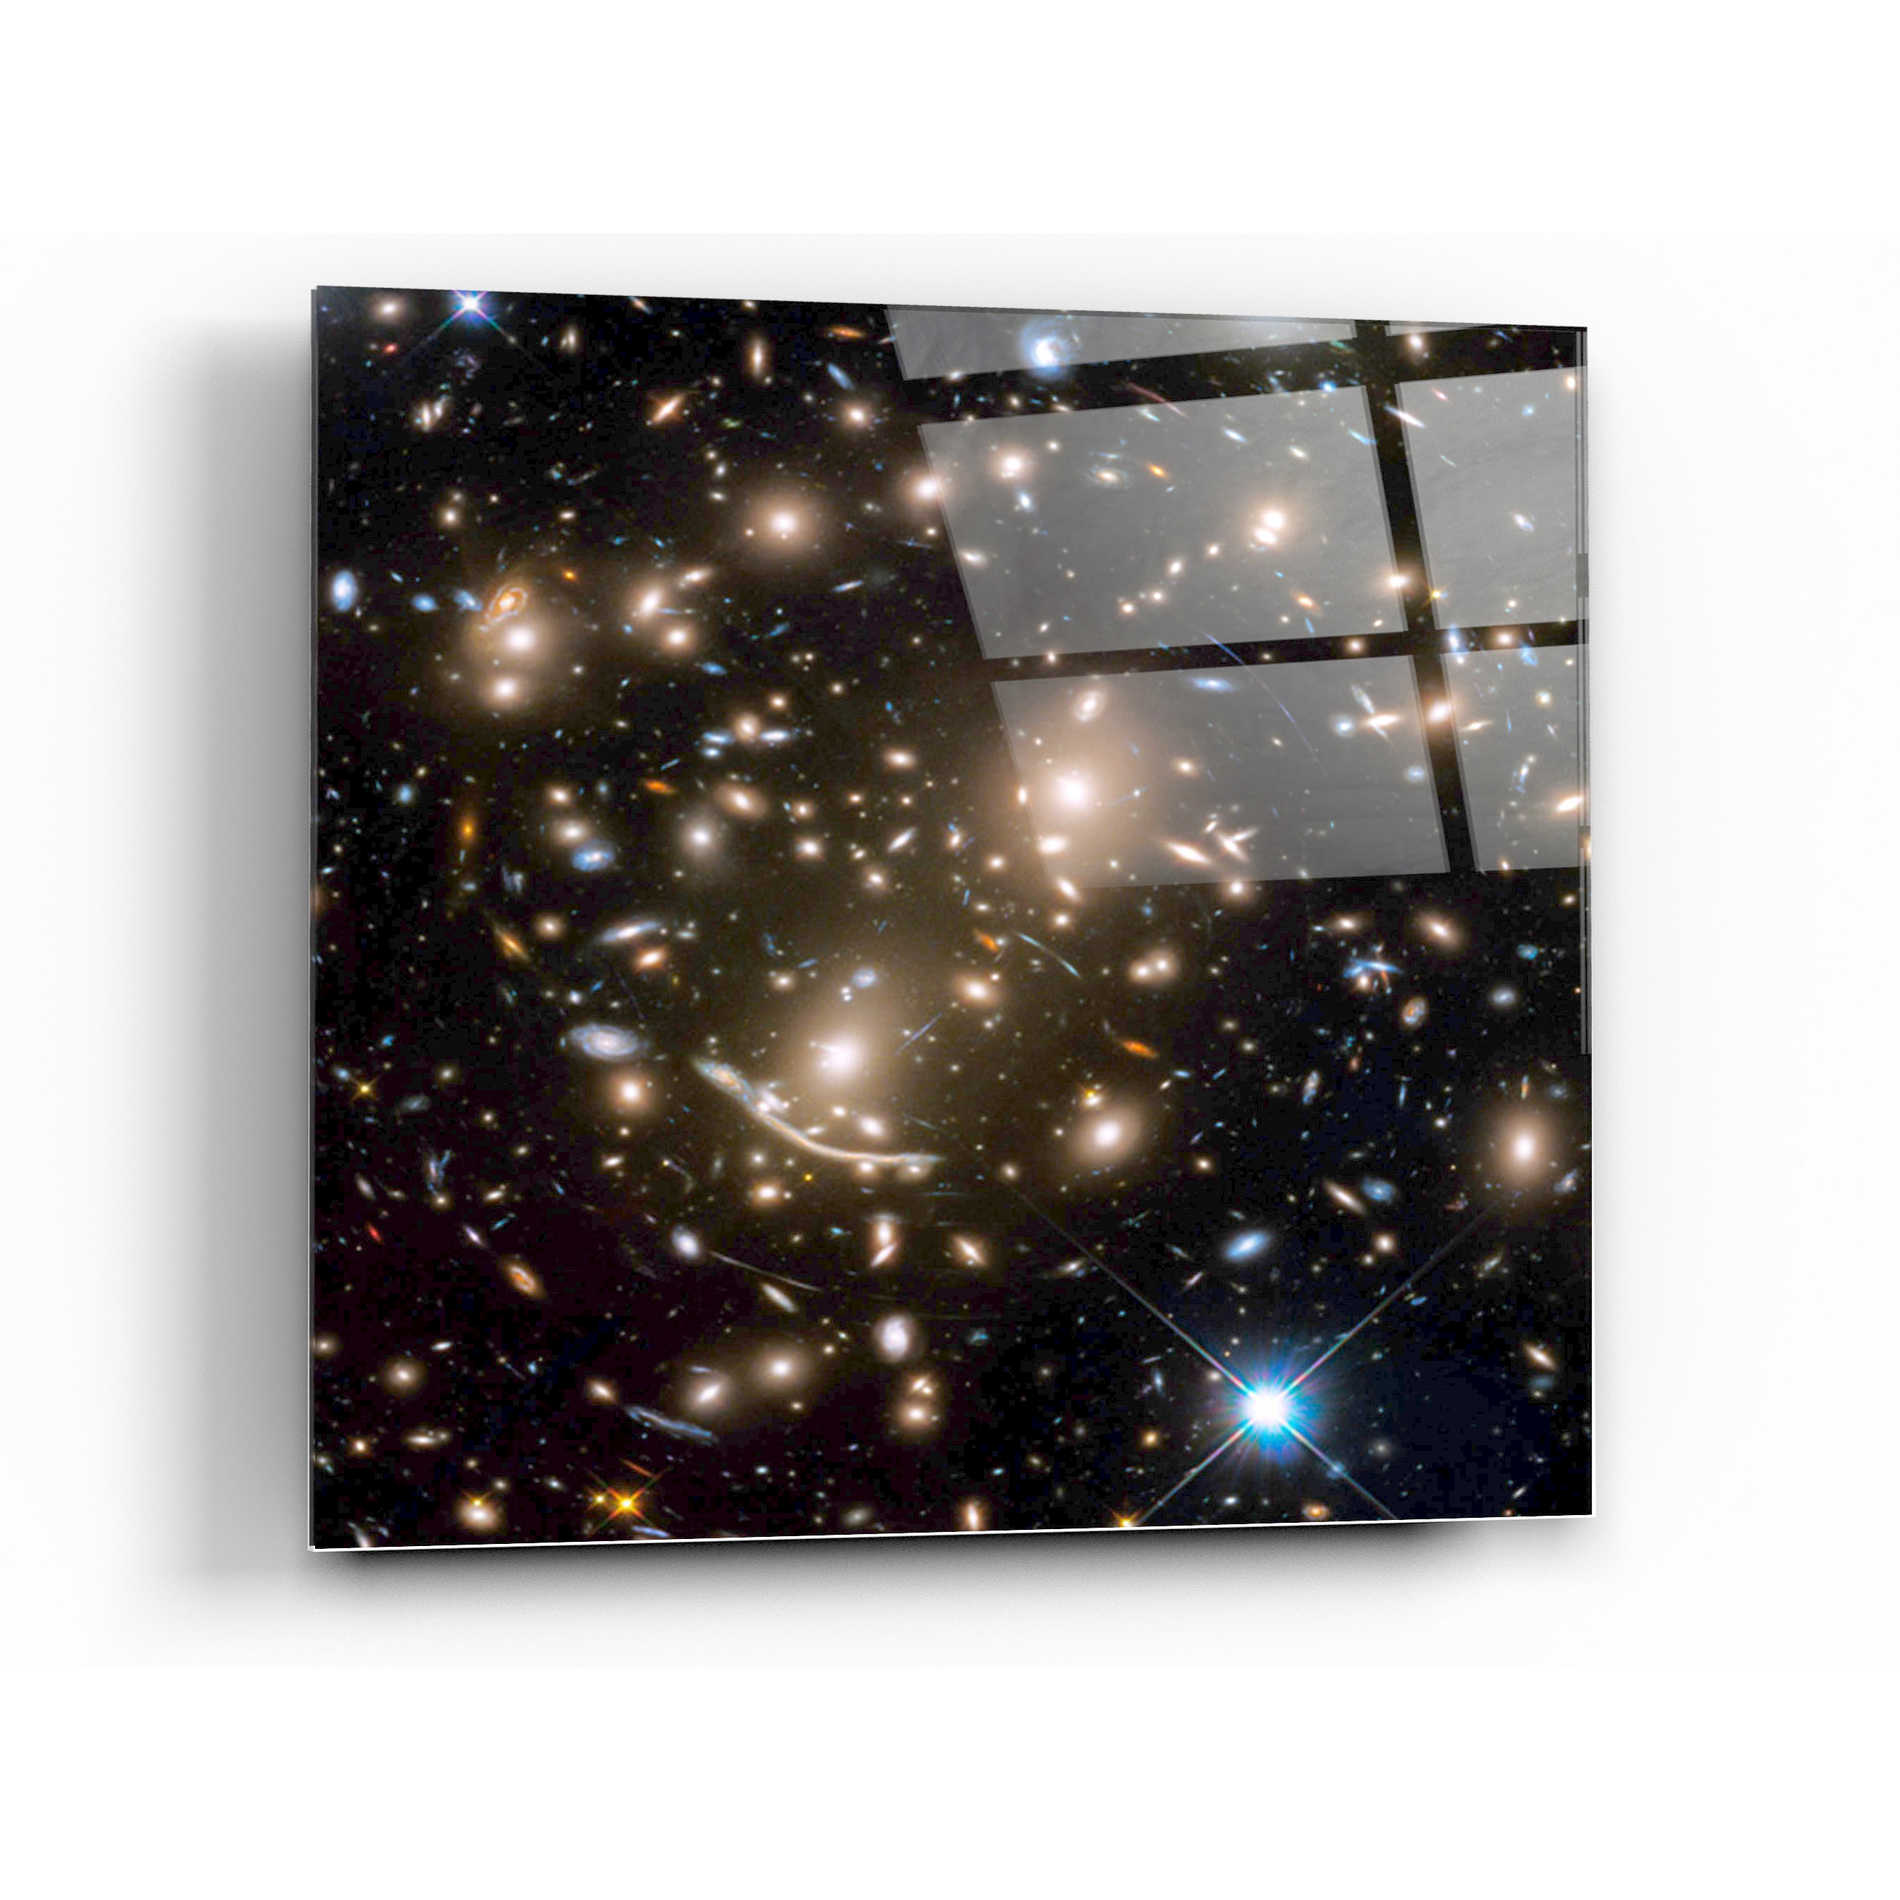 Epic Art "Abell 370" Hubble Space Telescope Acrylic Glass Wall Art